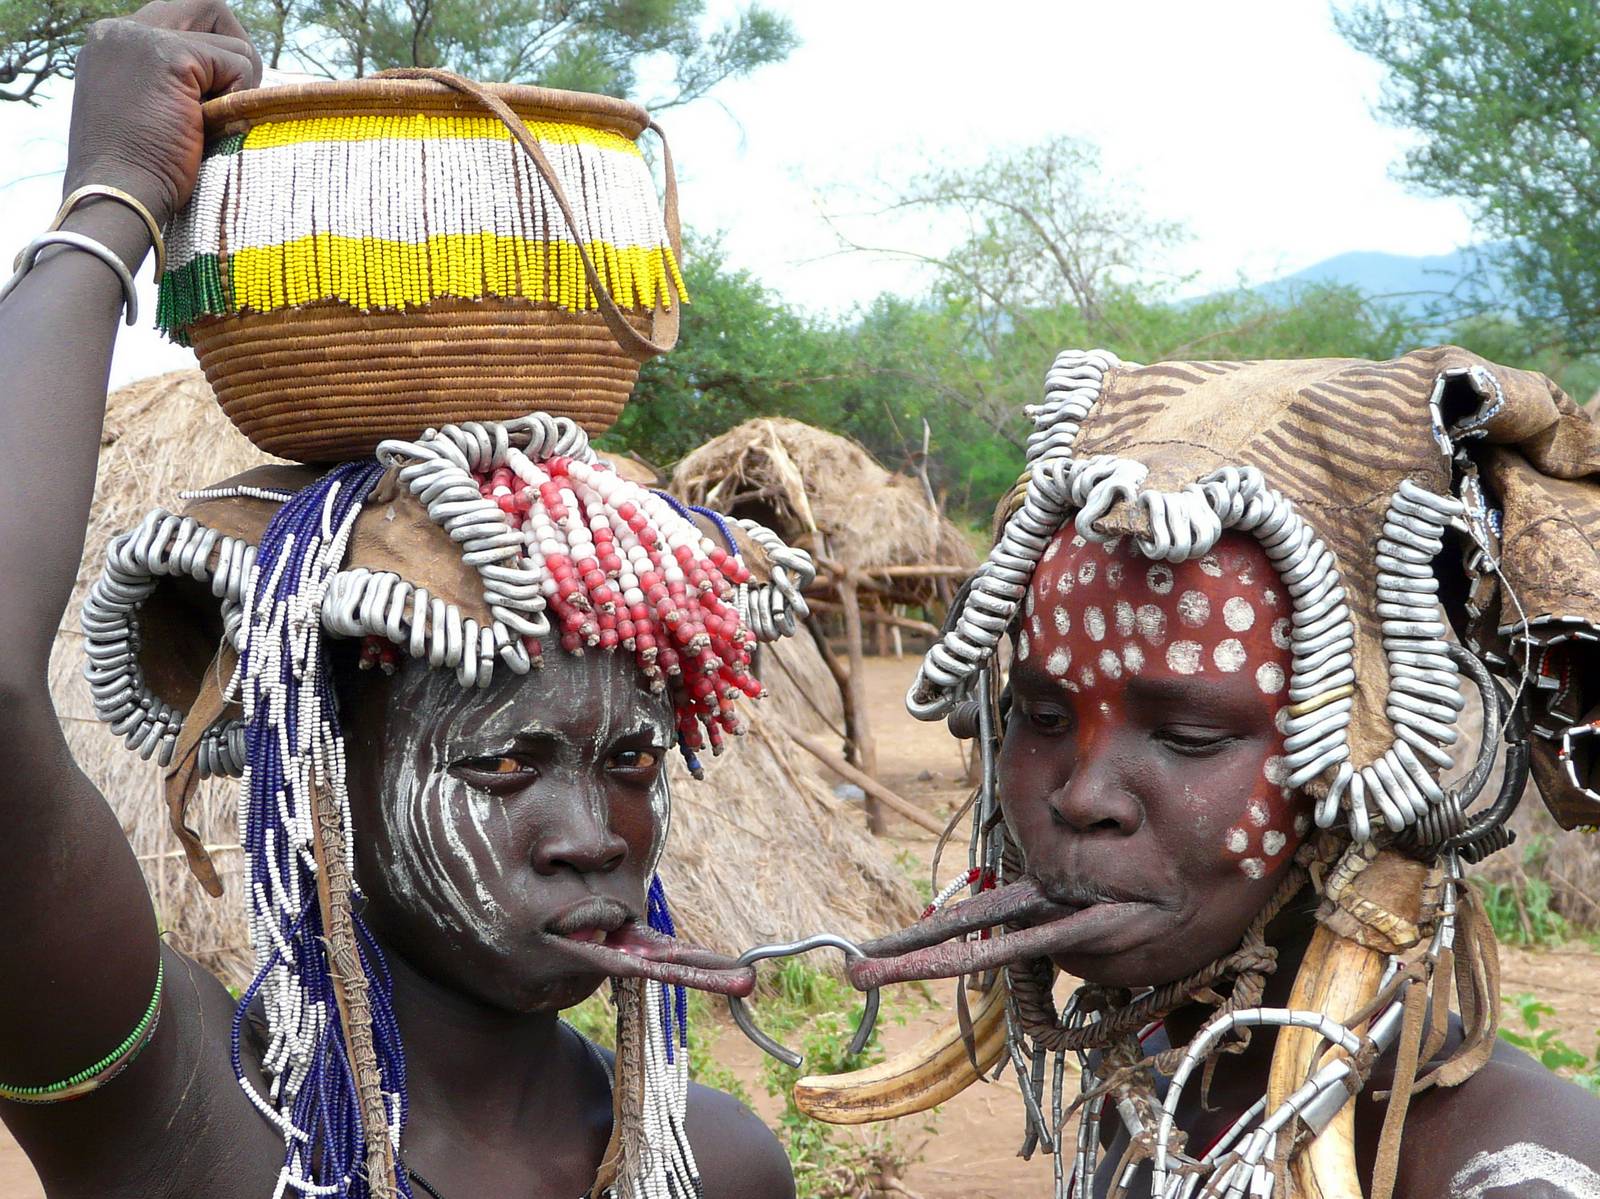  Etiopie  nejbizarnj  kmeny Afriky